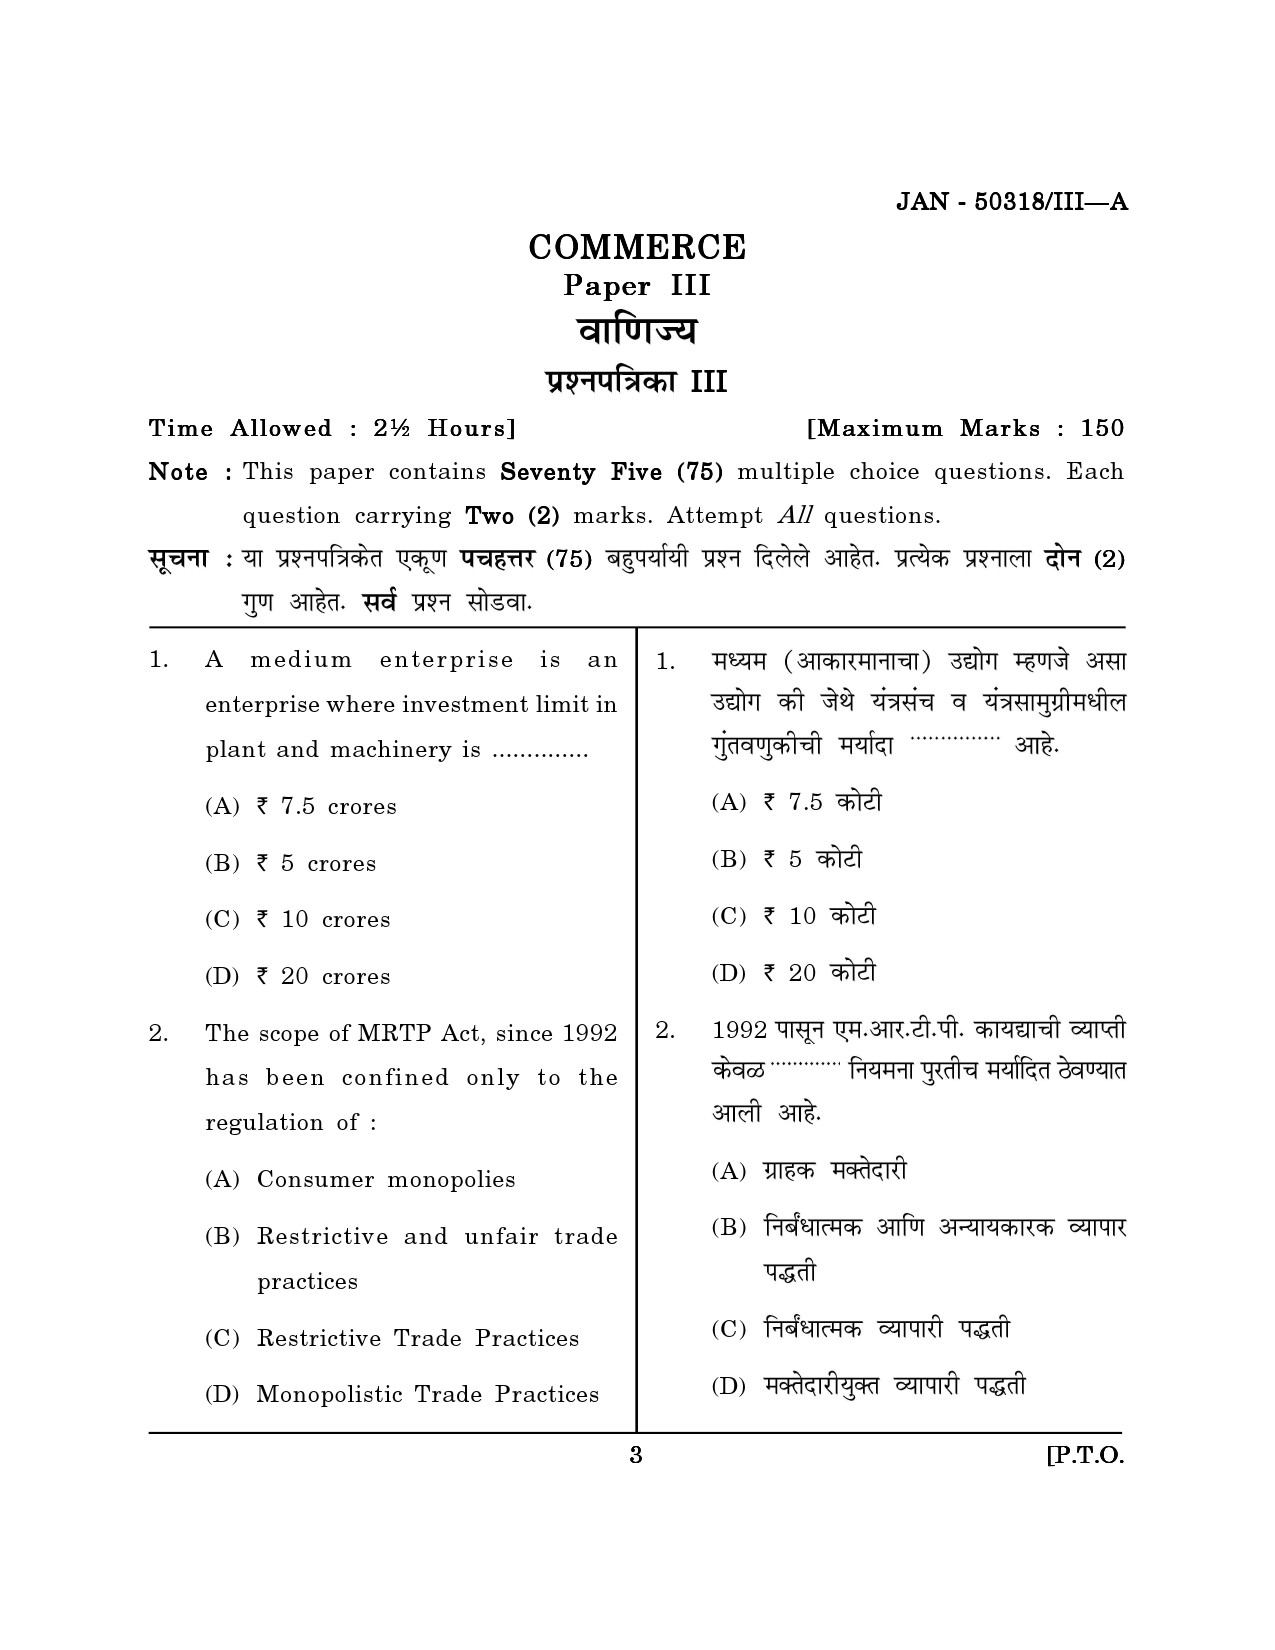 Maharashtra SET Commerce Question Paper III January 2018 2